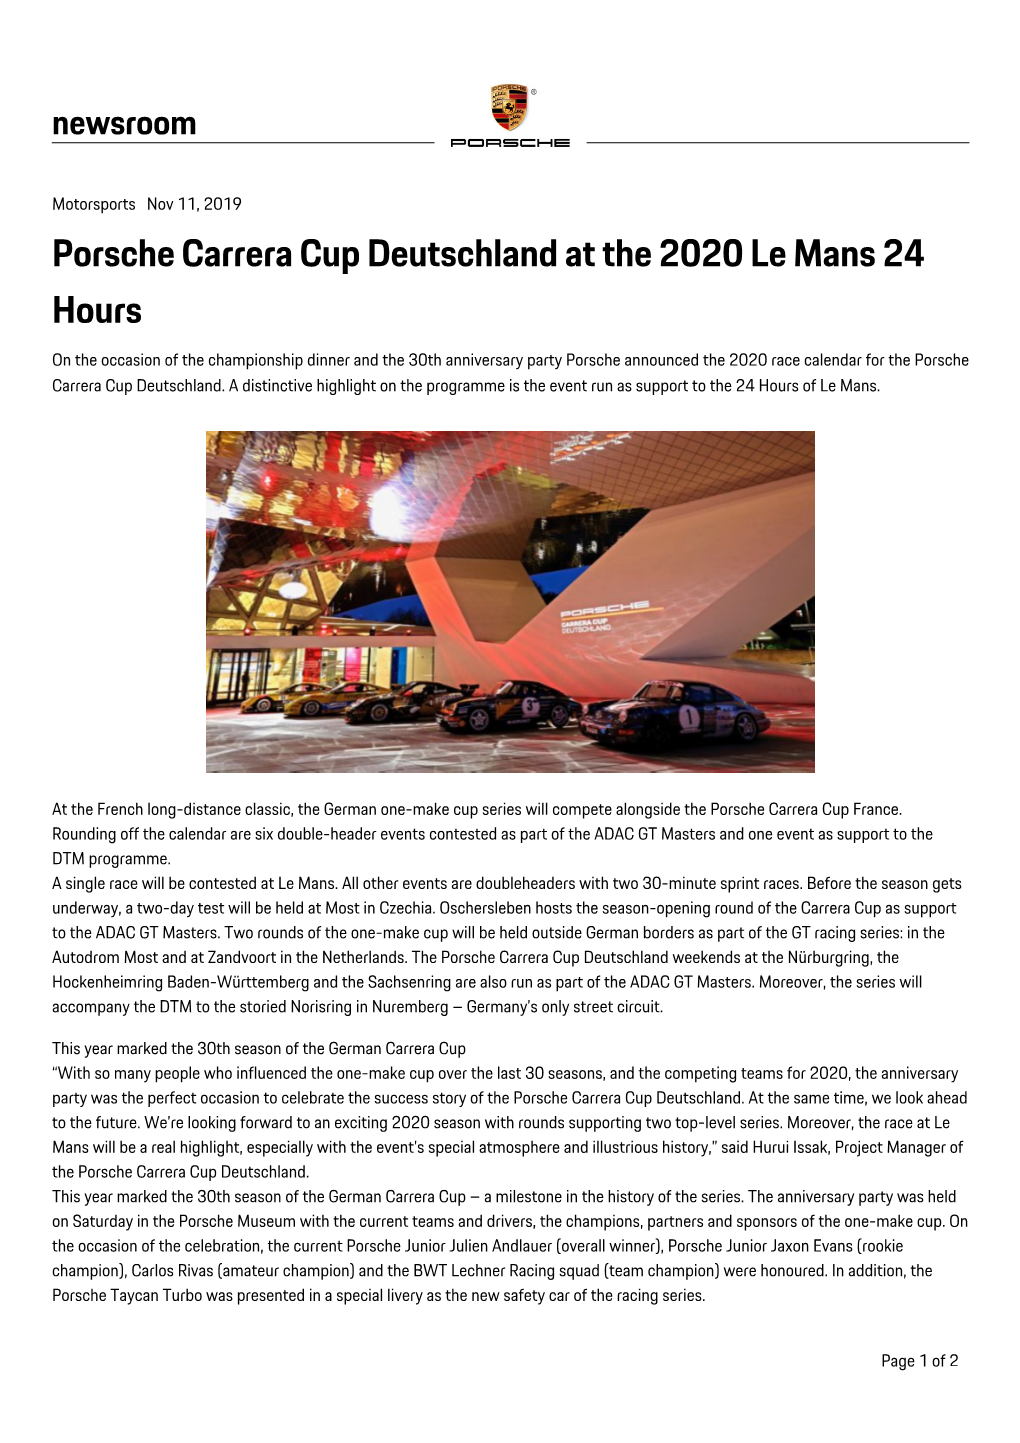 Porsche Carrera Cup Deutschland at the 2020 Le Mans 24 Hours, Press Release, 11/11/2019, Porsche AG